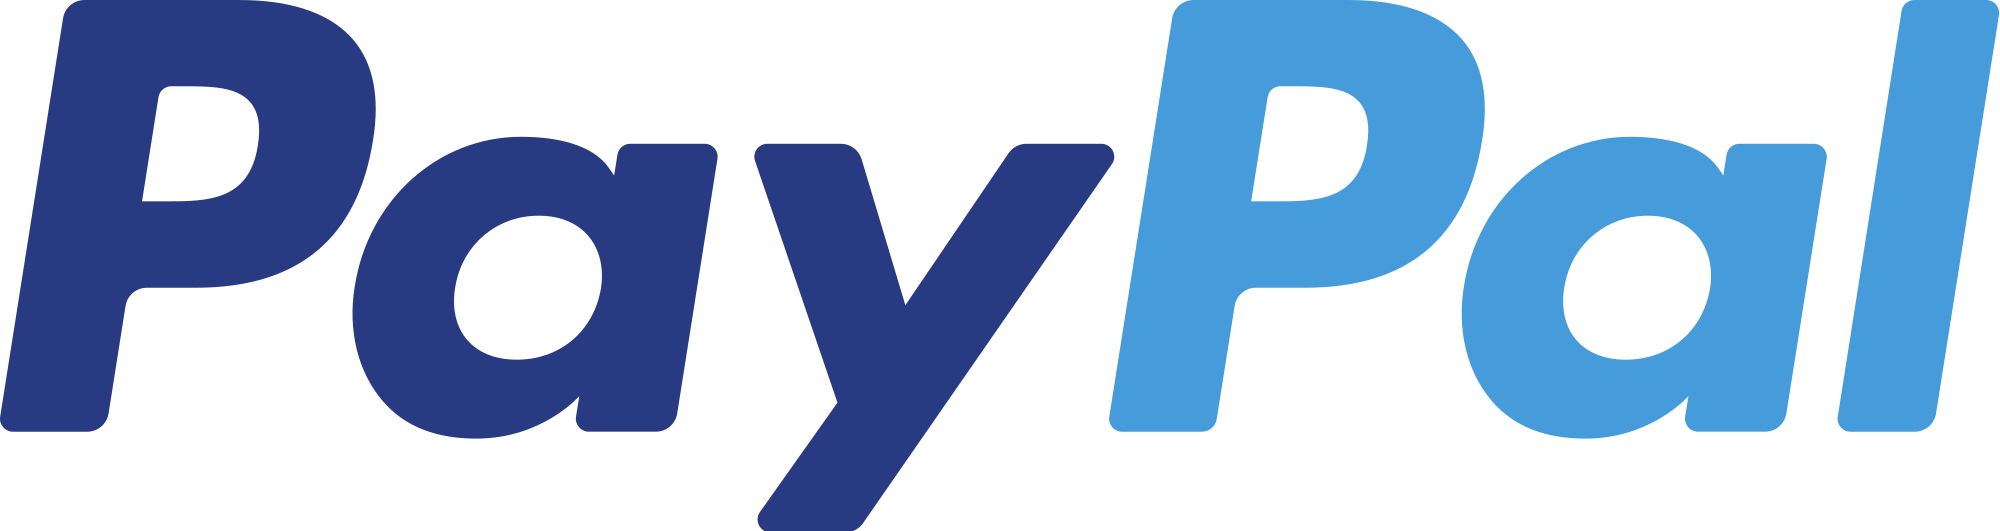 PayPal_logo.svg